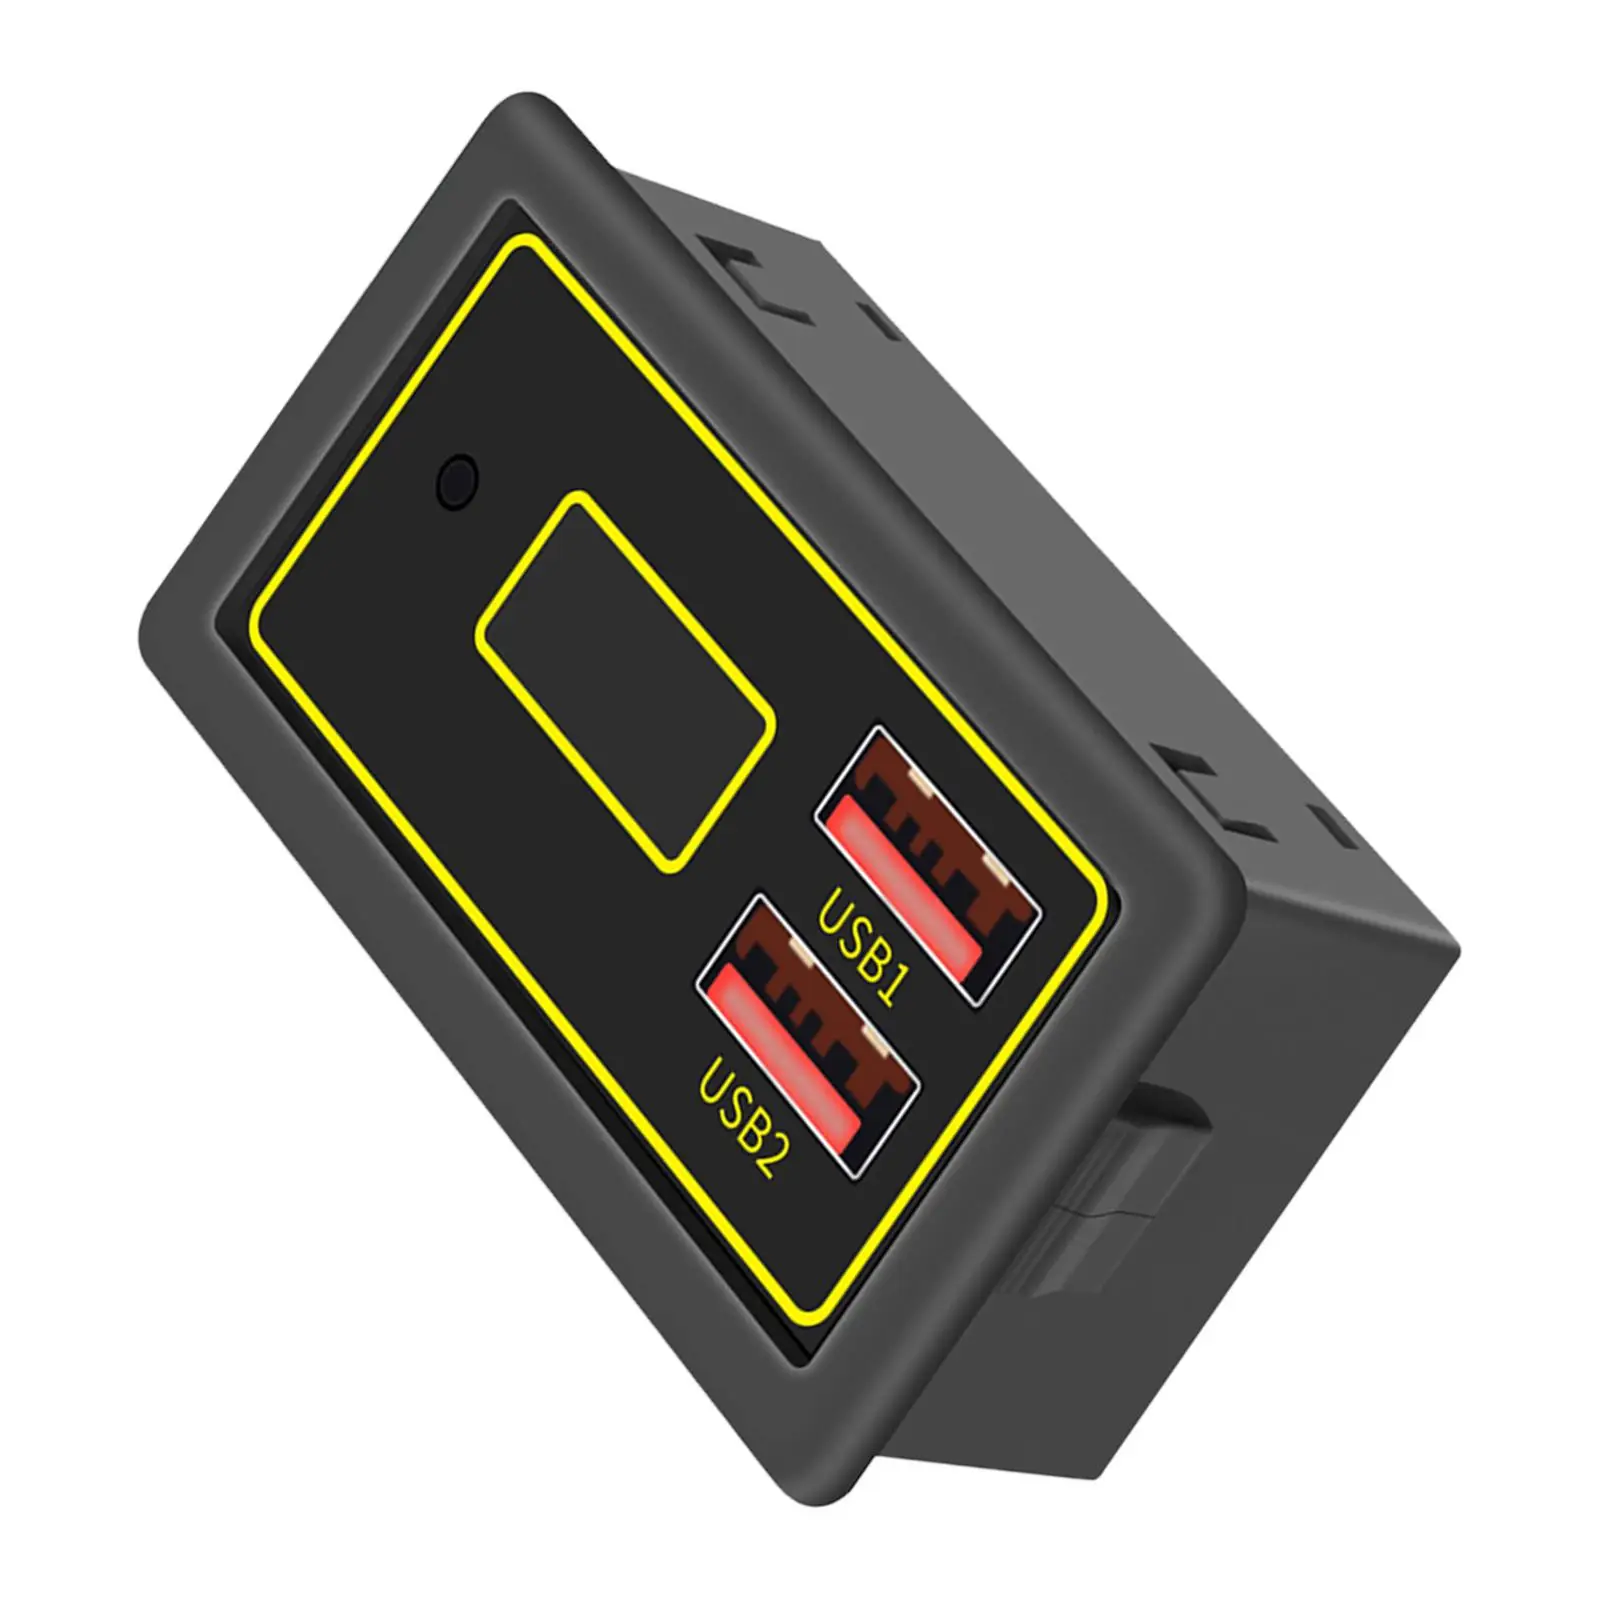 Battery Capacity Voltage Meter, Digital Battery Capacity Tester, 12V 24V Support LCD Display Battery Indicator Voltage Meter